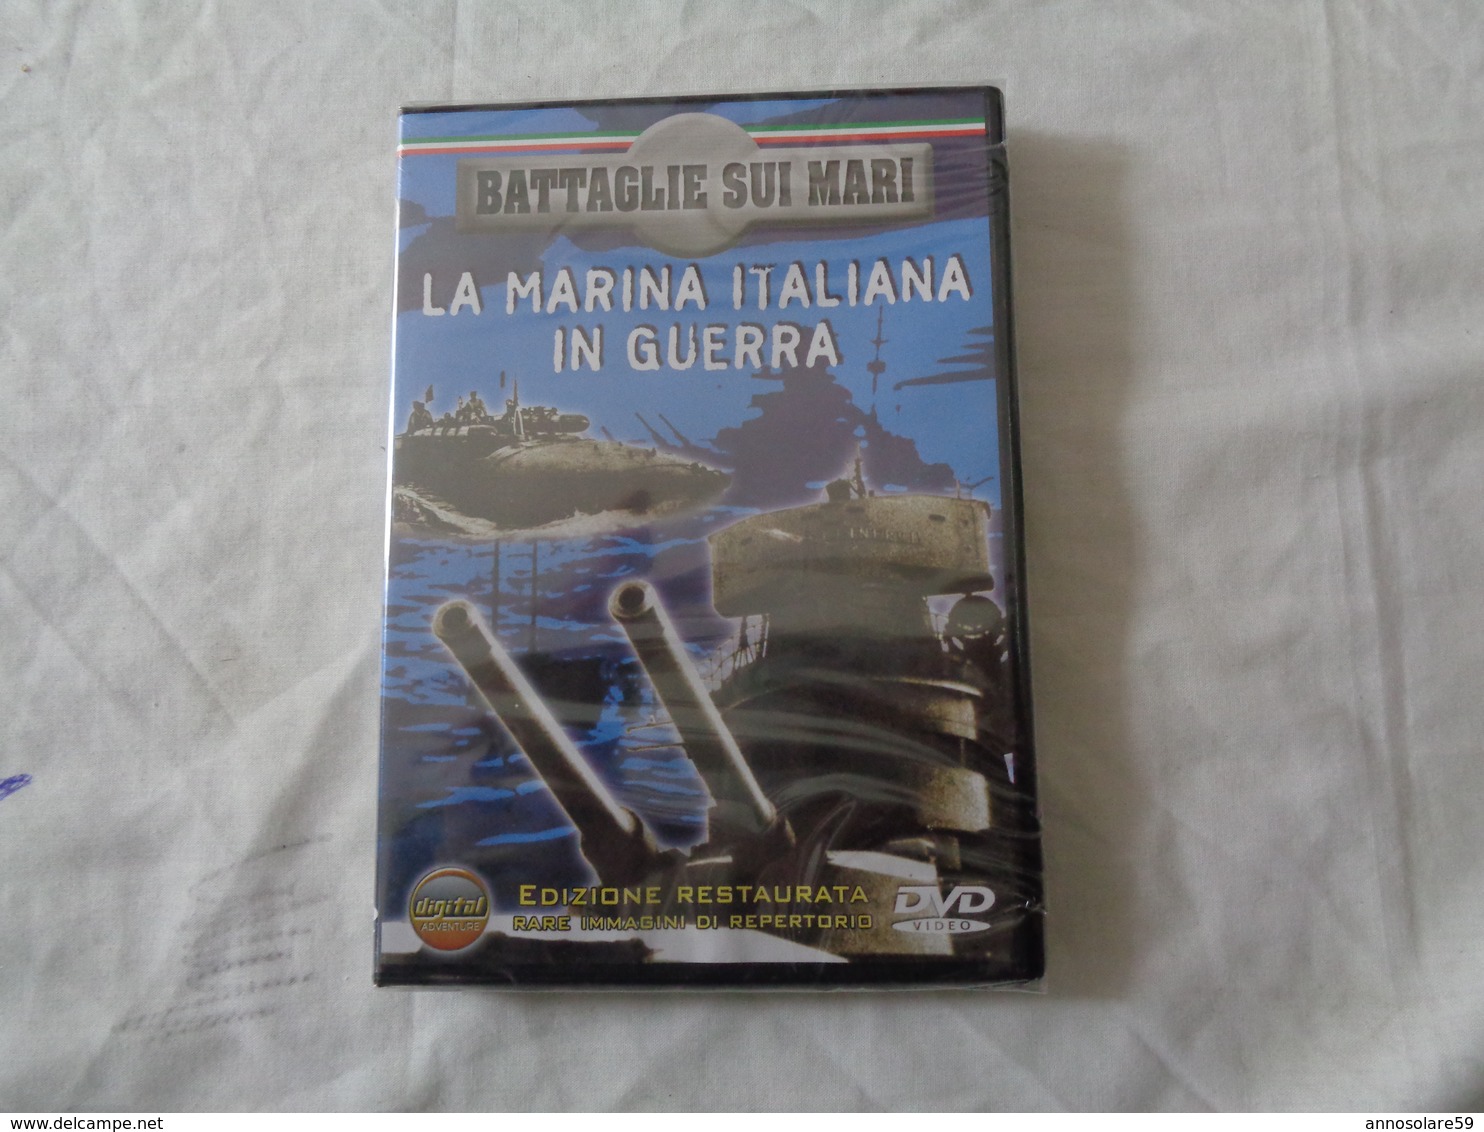 DVD VIDEO: LA MARINA ITALIANA IN GUERRA (BATTAGLIE SUI MARI) DOCUMENTARIO - SIGILLATO - LEGGI - DVD Musicaux